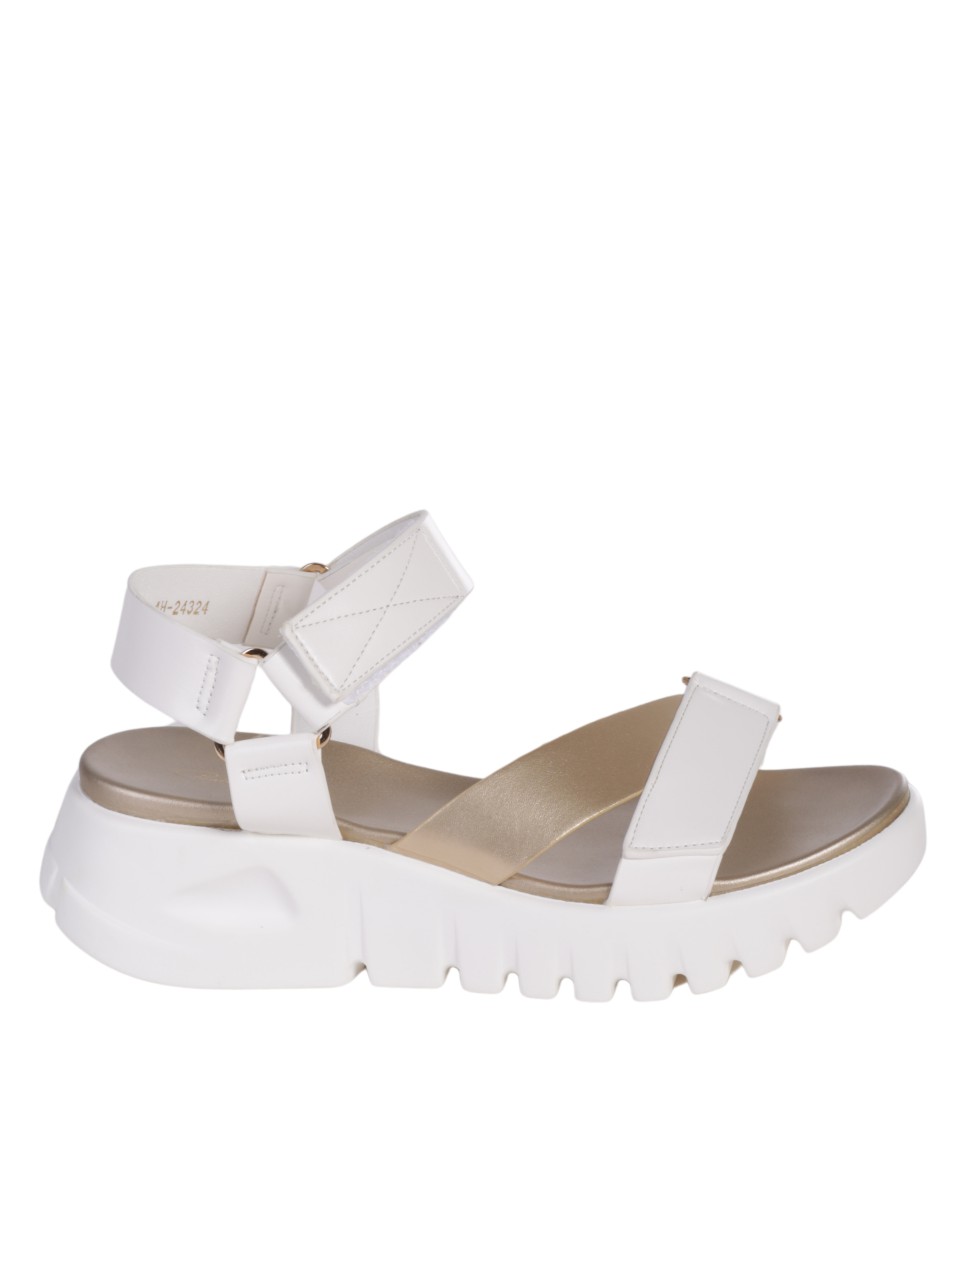 Ежедневни дамски сандали на платформа в бял/златист цвят 4H-24324 white/gold